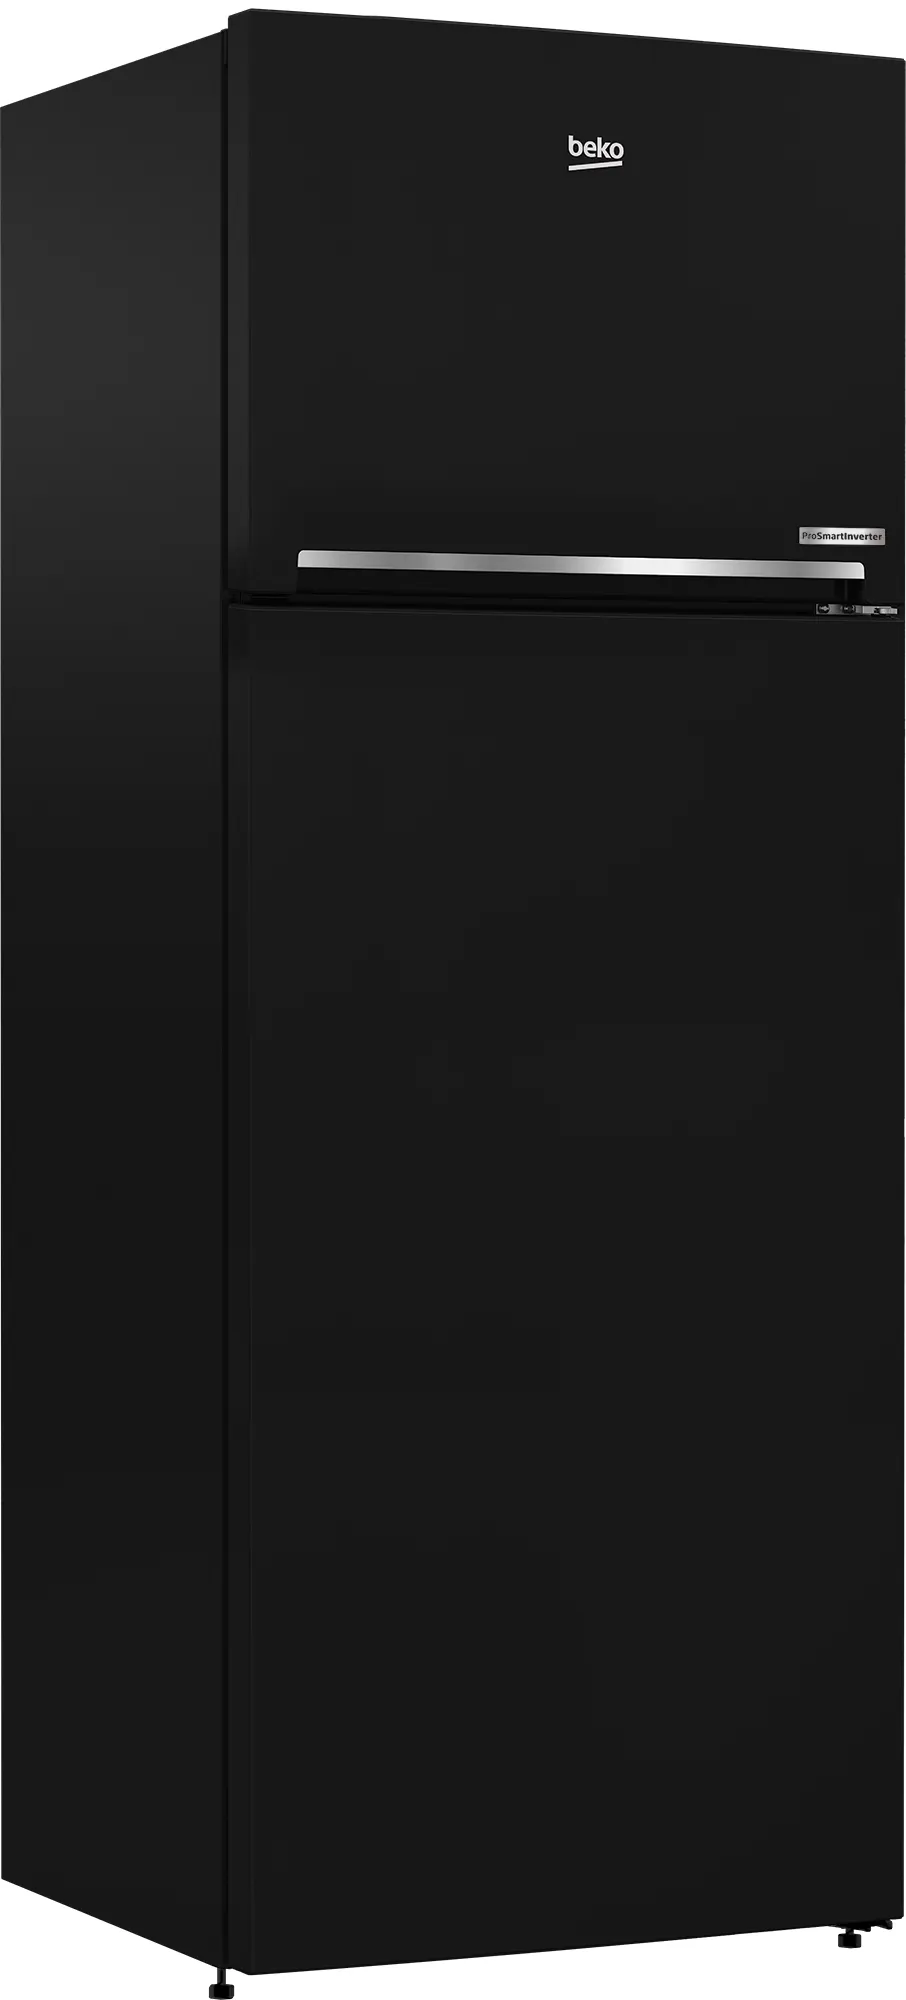 Beko Refrigerator, No Frost, 408 Liters, 2 Doors, Inverter, Black, RDNE448M20B